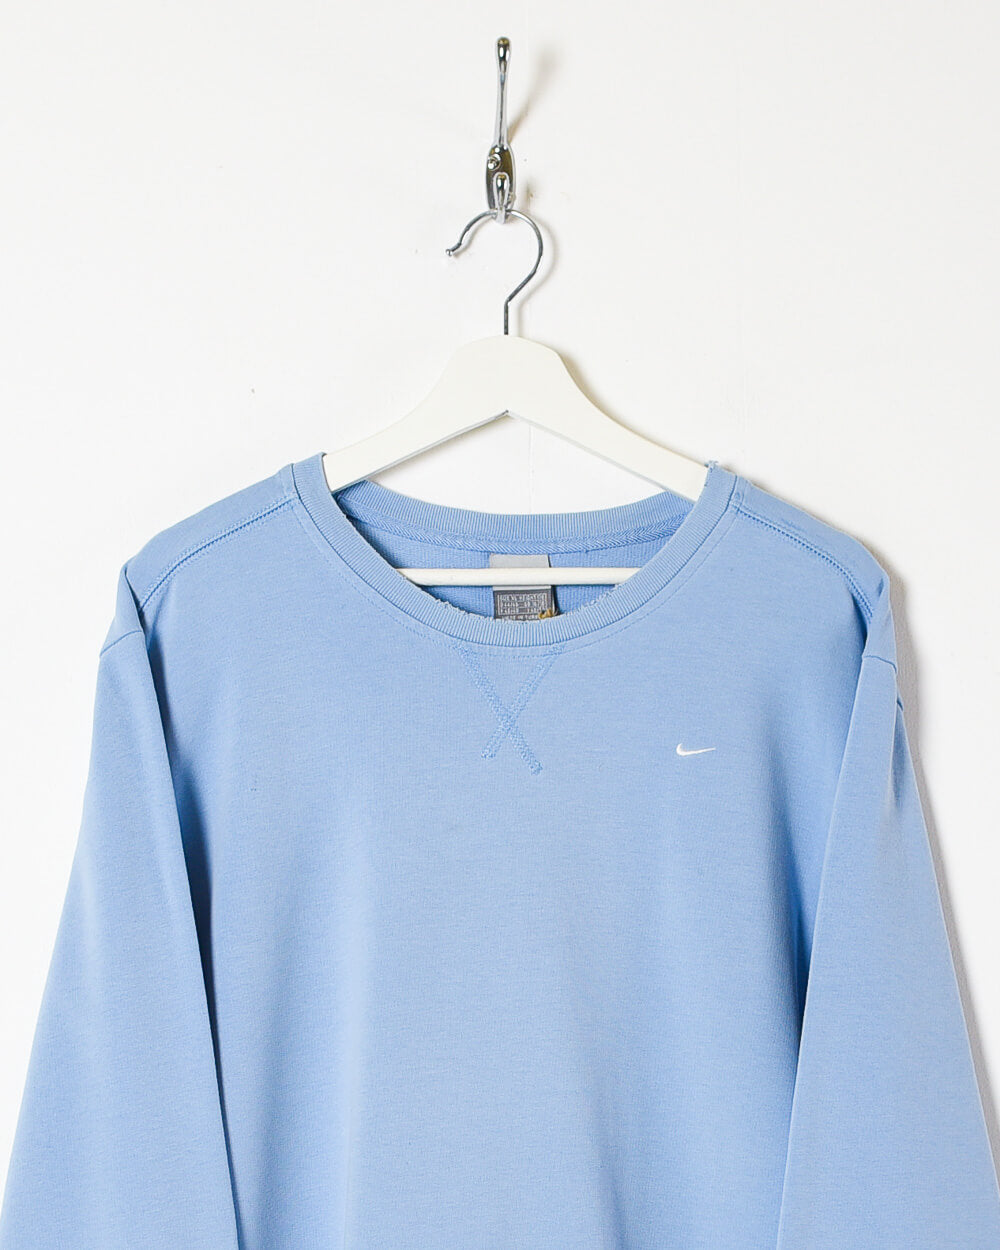 Baby Nike Women's Sweatshirt - X-Large